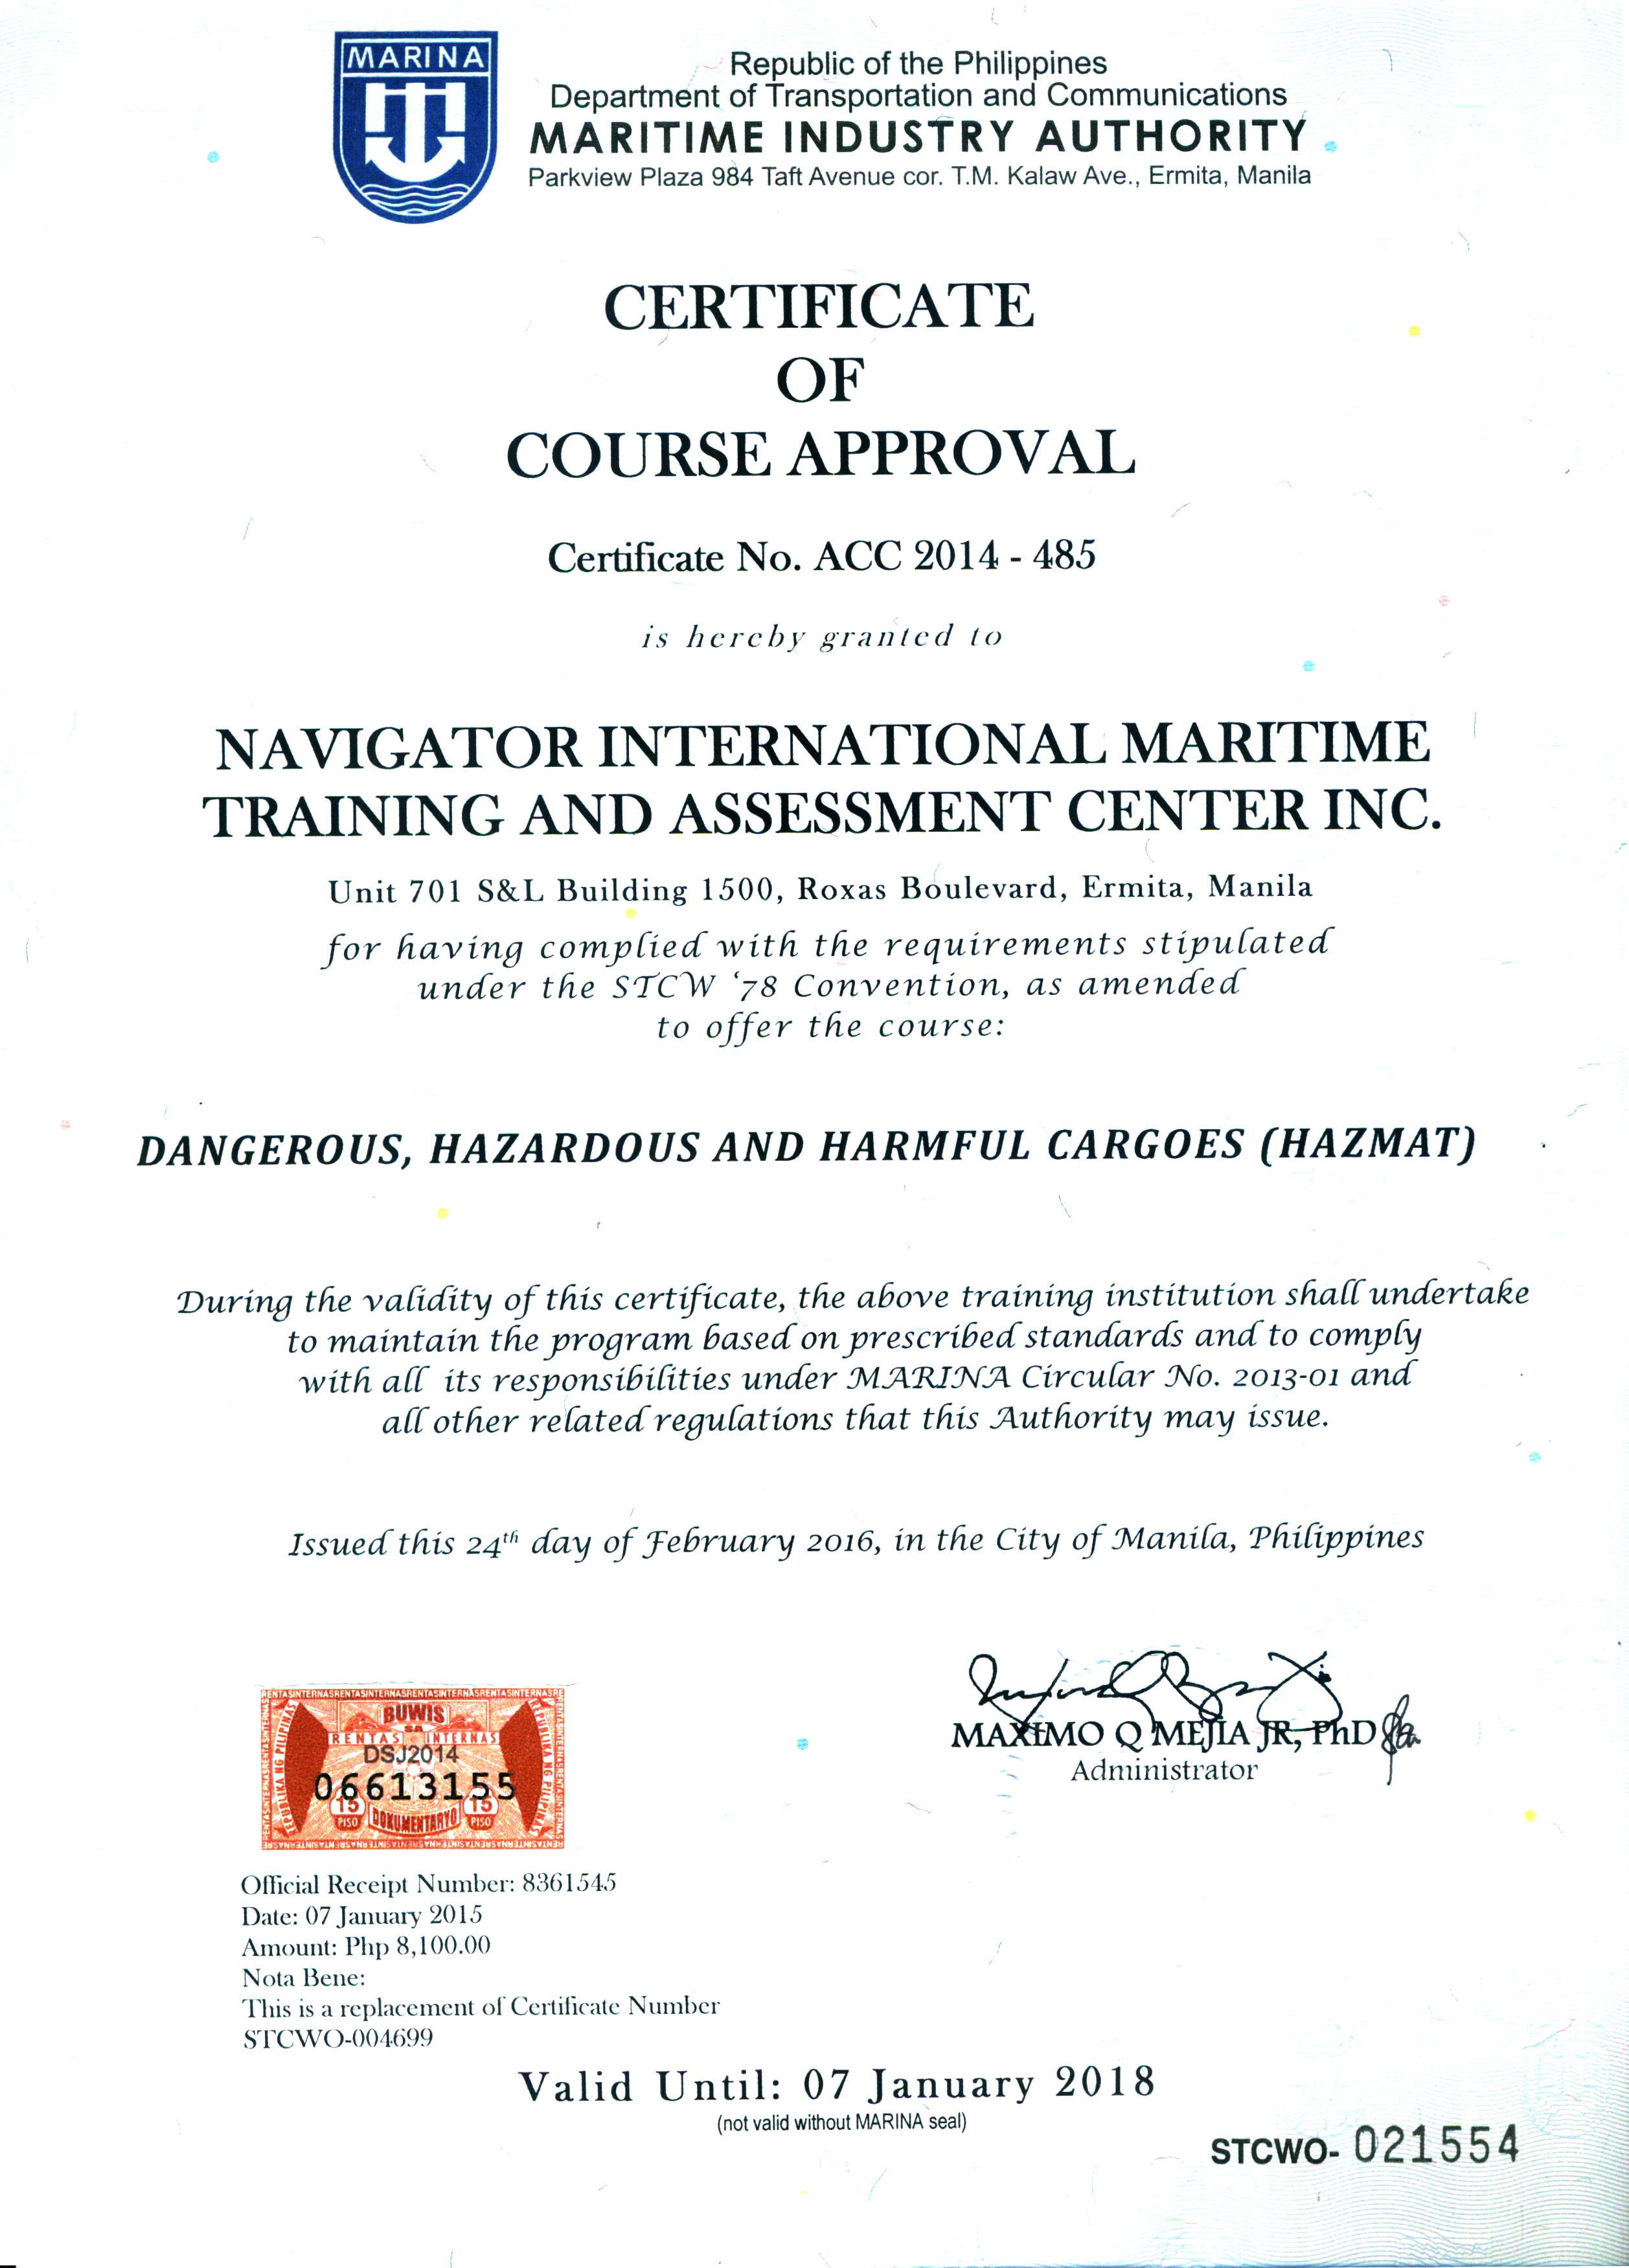 Dangerous, Hazardous and harmful cargoes (HAZMAT)